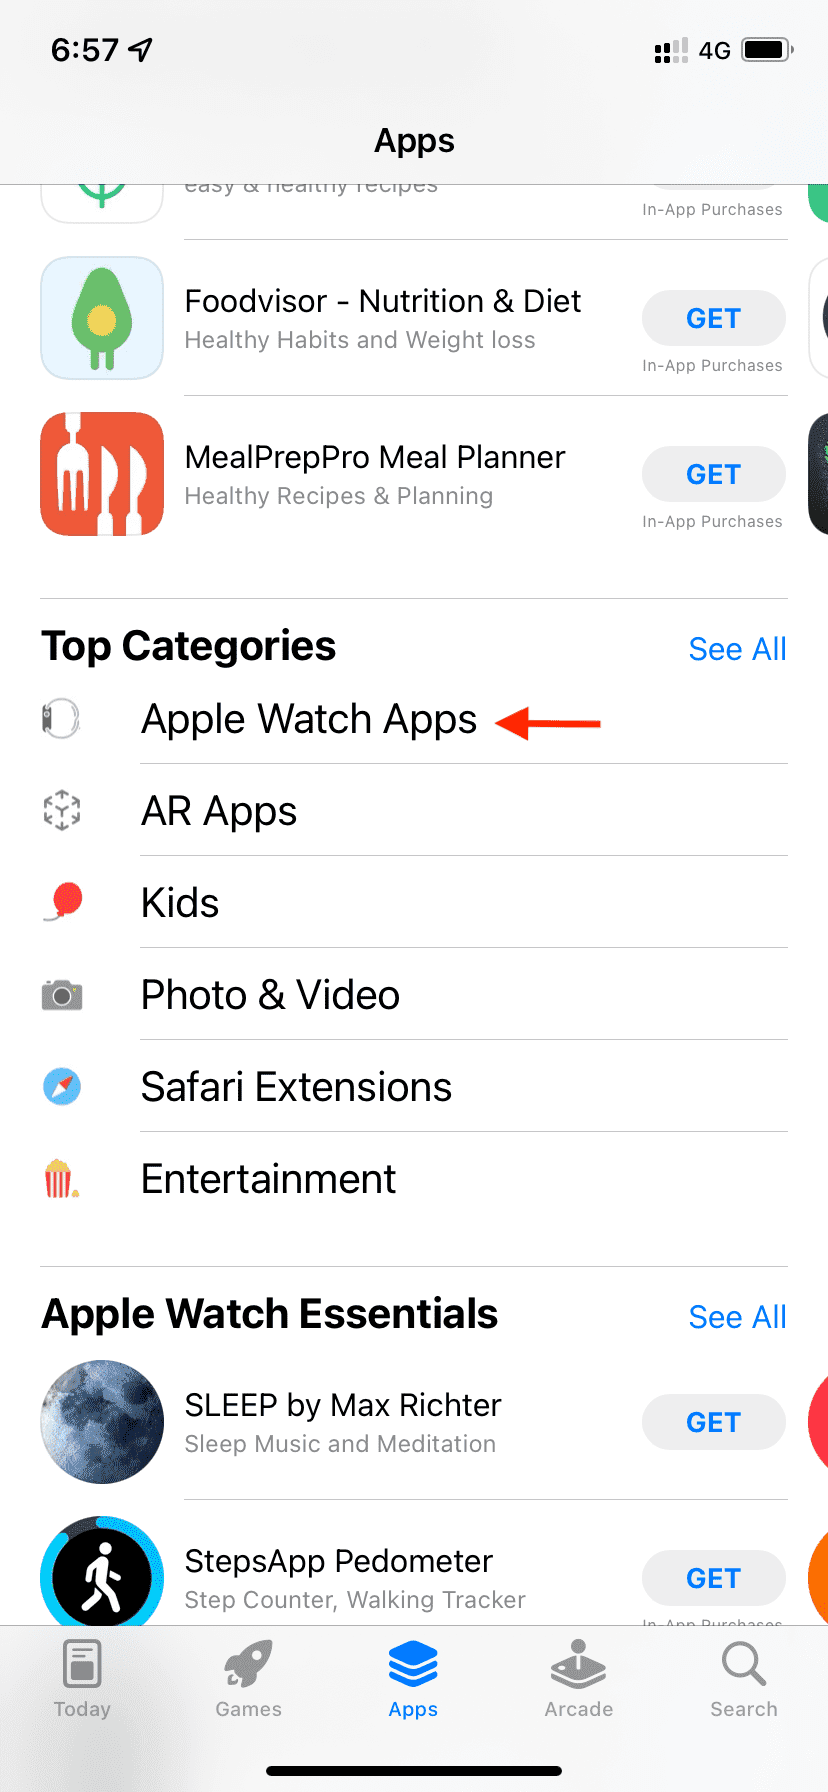 Apple Watch Apps in iPhone App Store